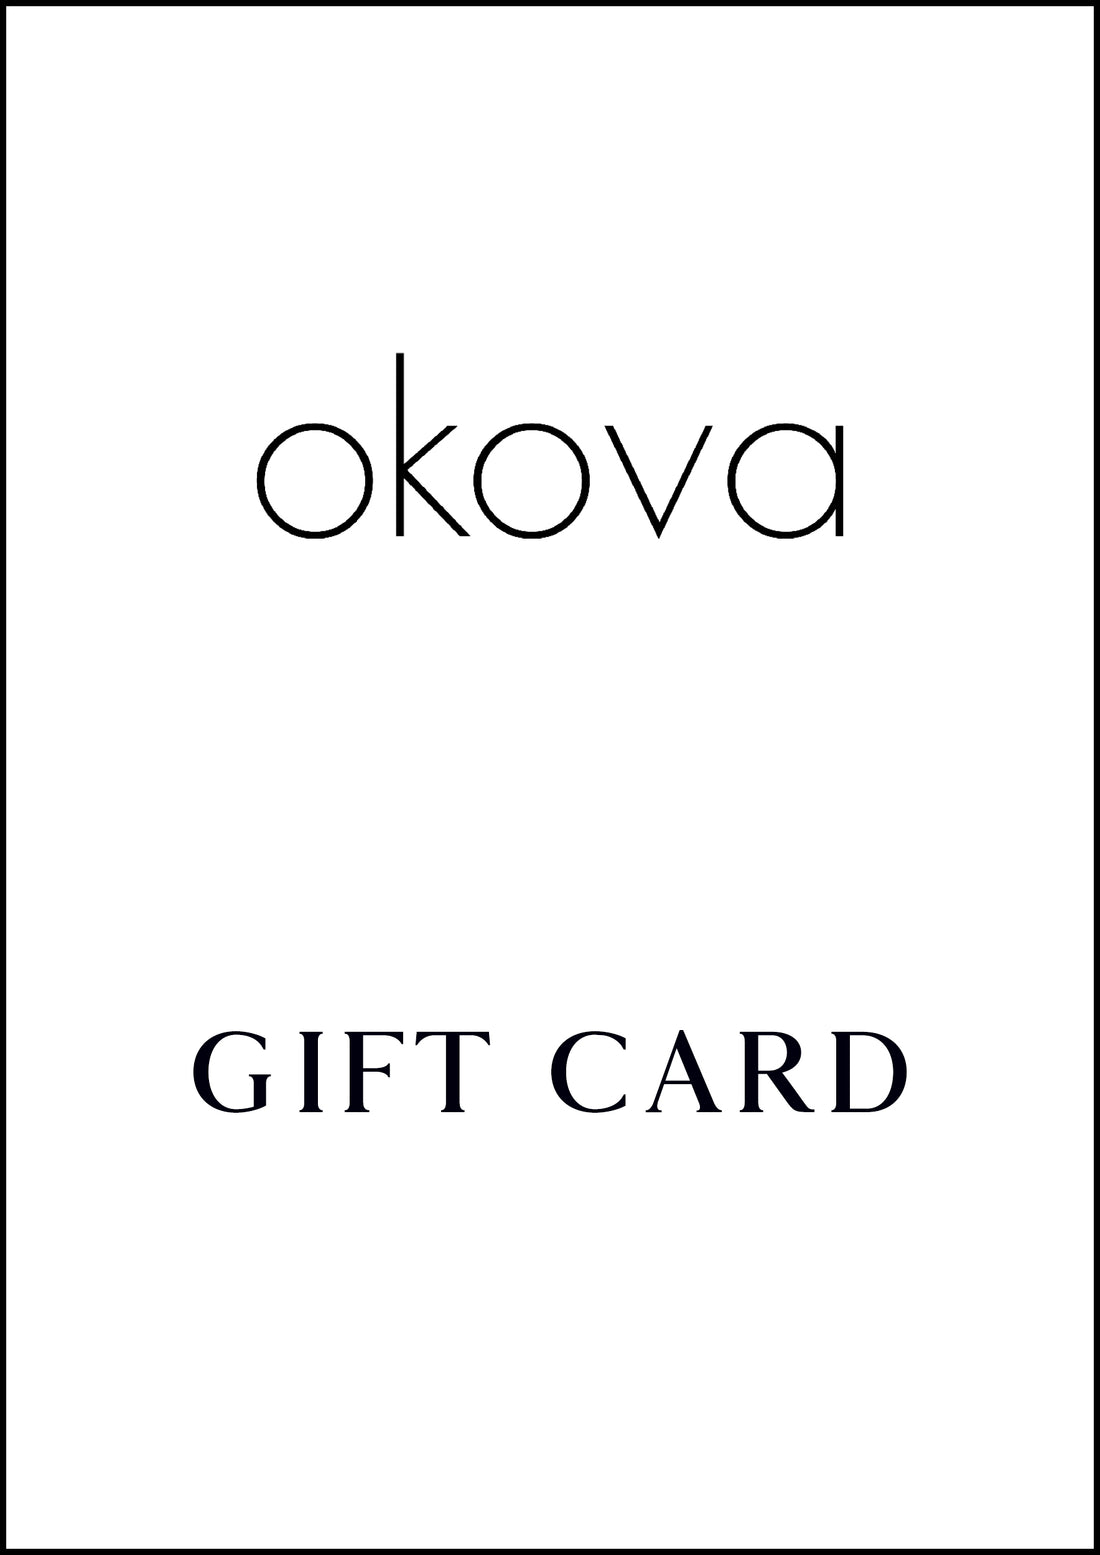 OKOVA GIFT CARD - OKOVA